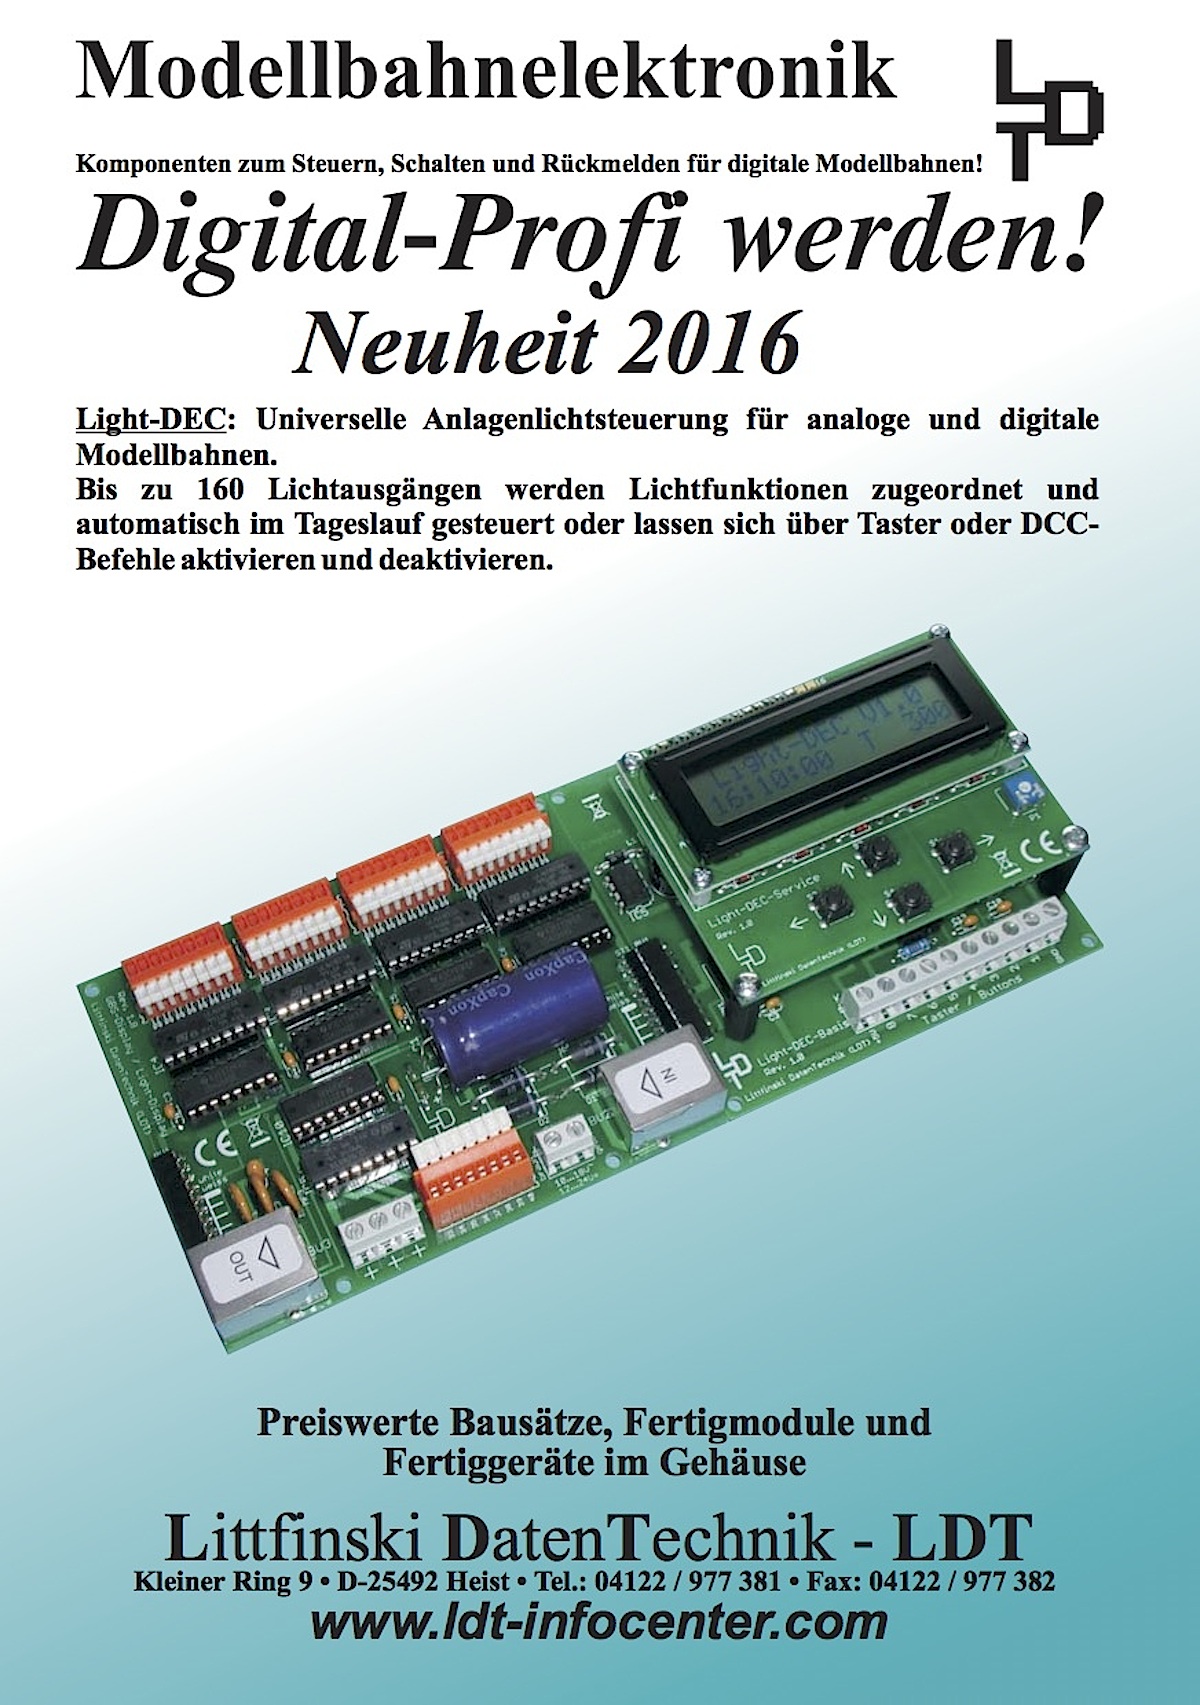 LDT - Littfinski Daten Technik Neuheiten (New Items) 2016